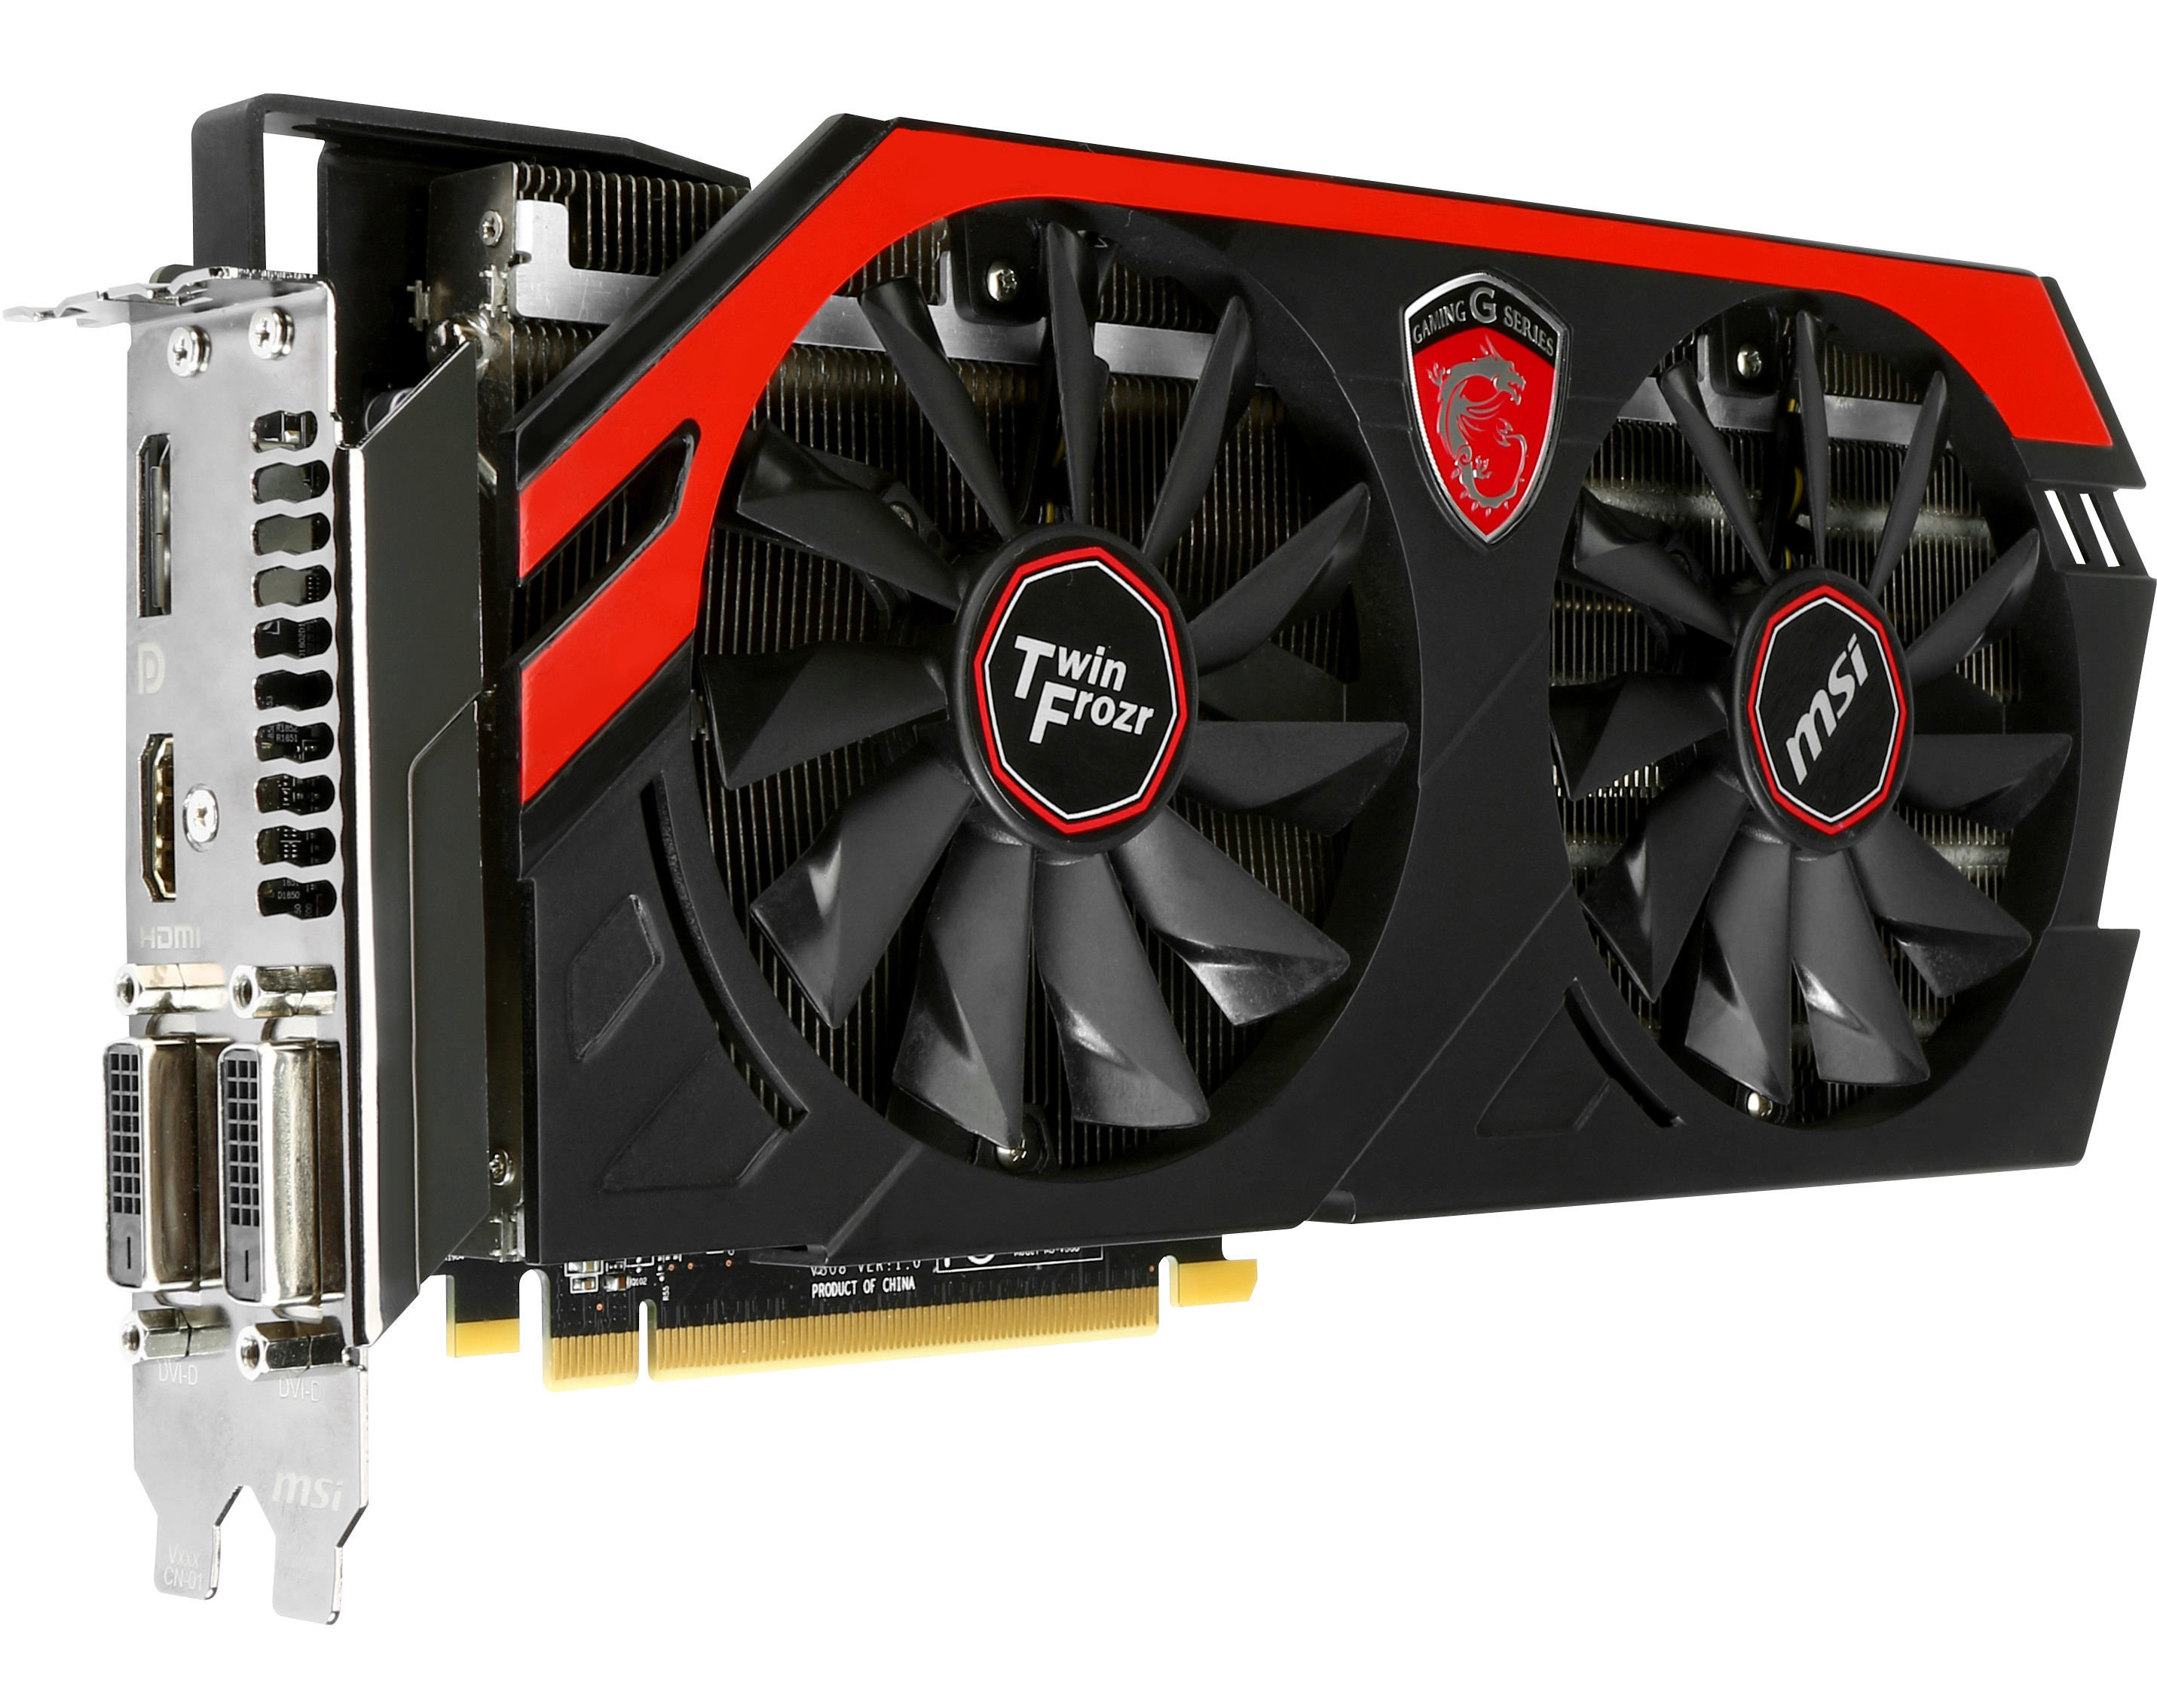 MSI Announces Radeon R9 290X Gaming 8GB Graphics Card | techPowerUp